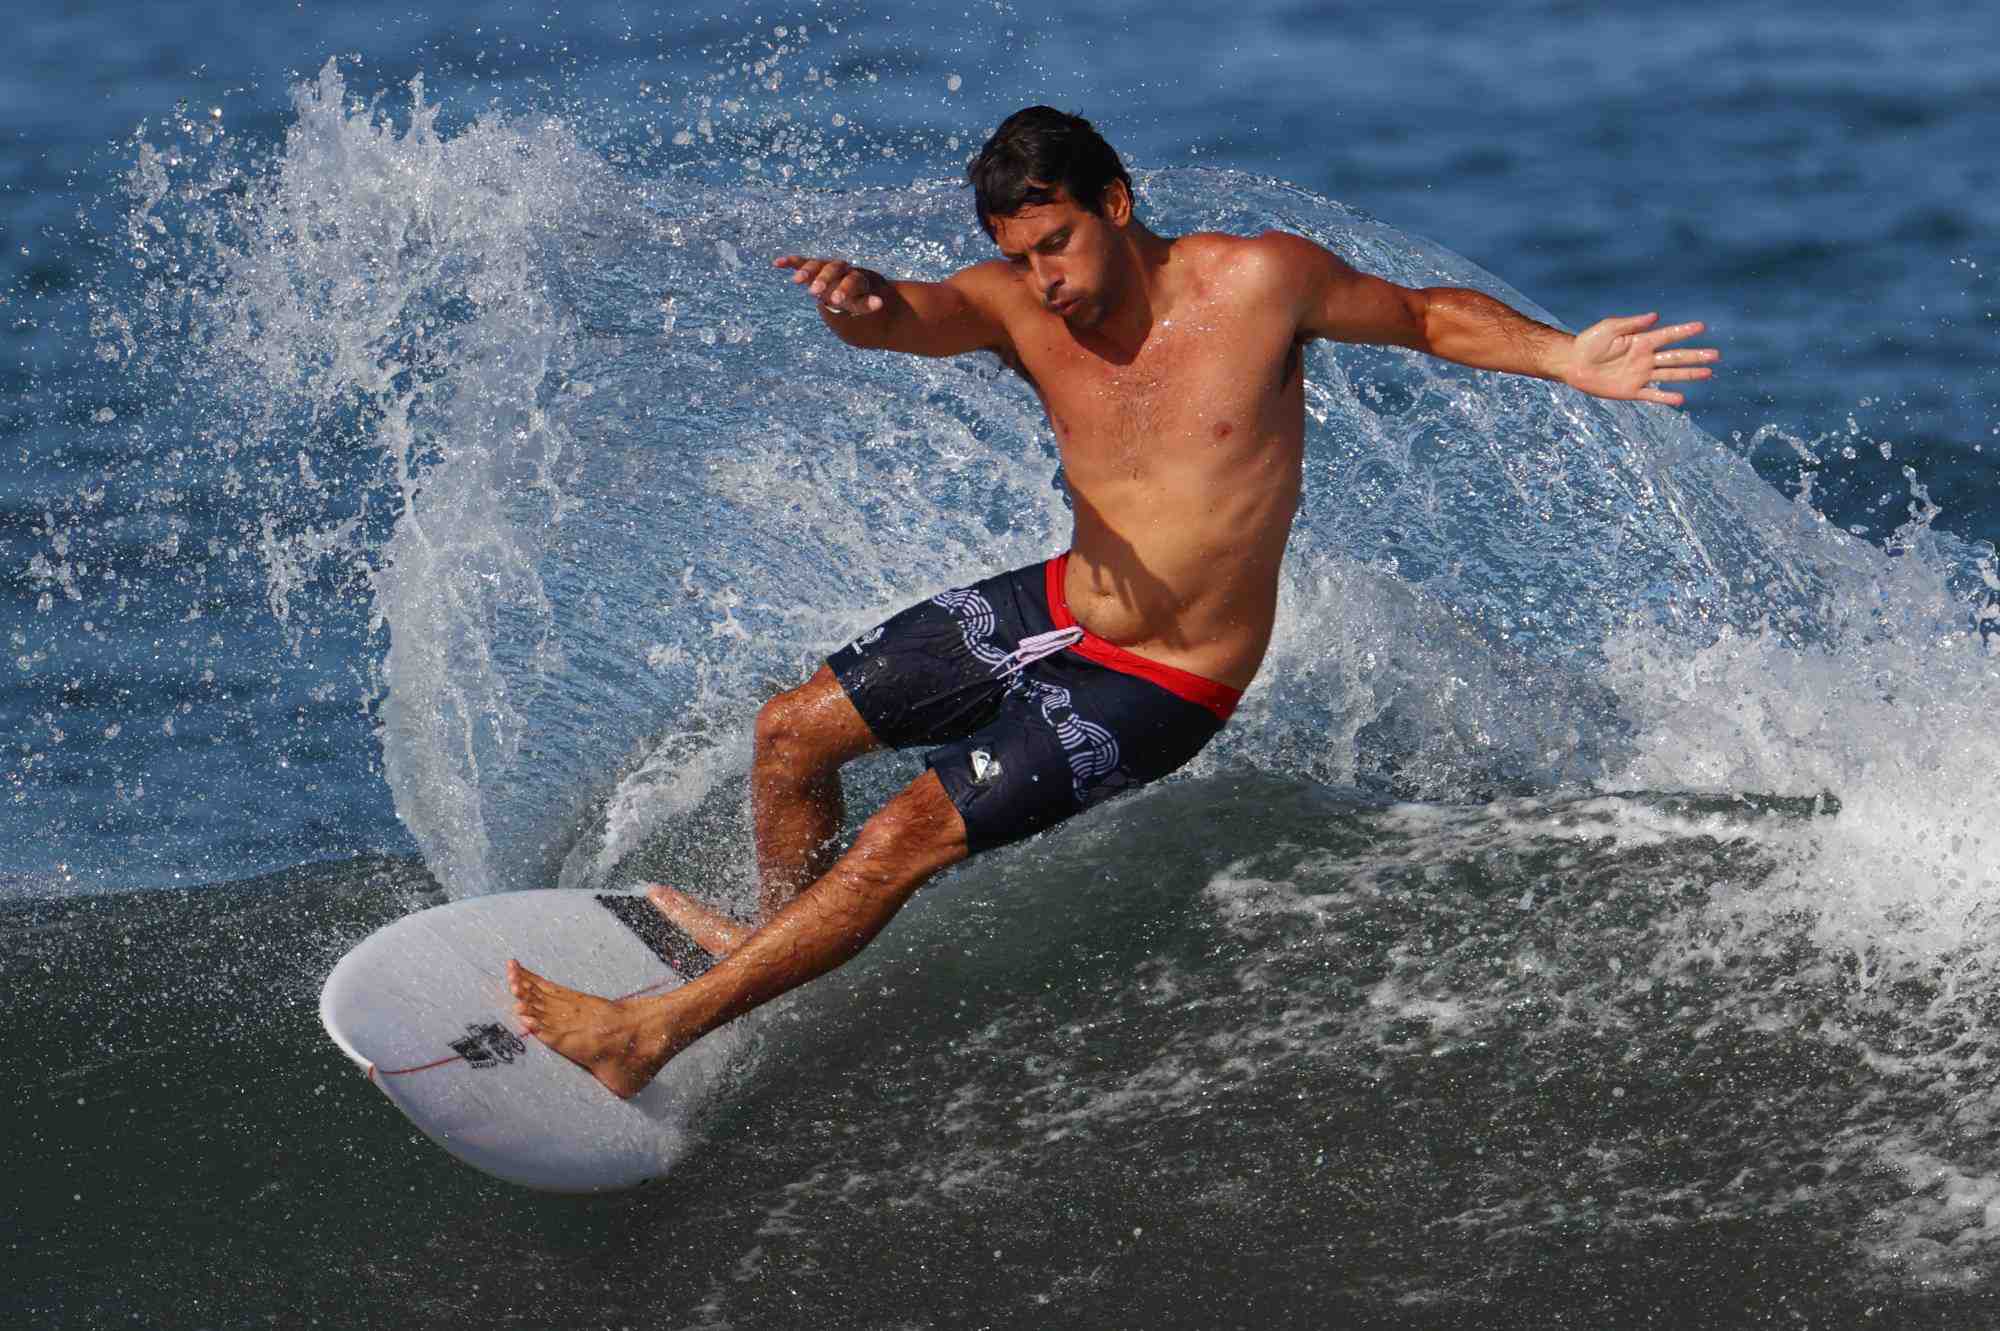 How do surfers survive big waves?